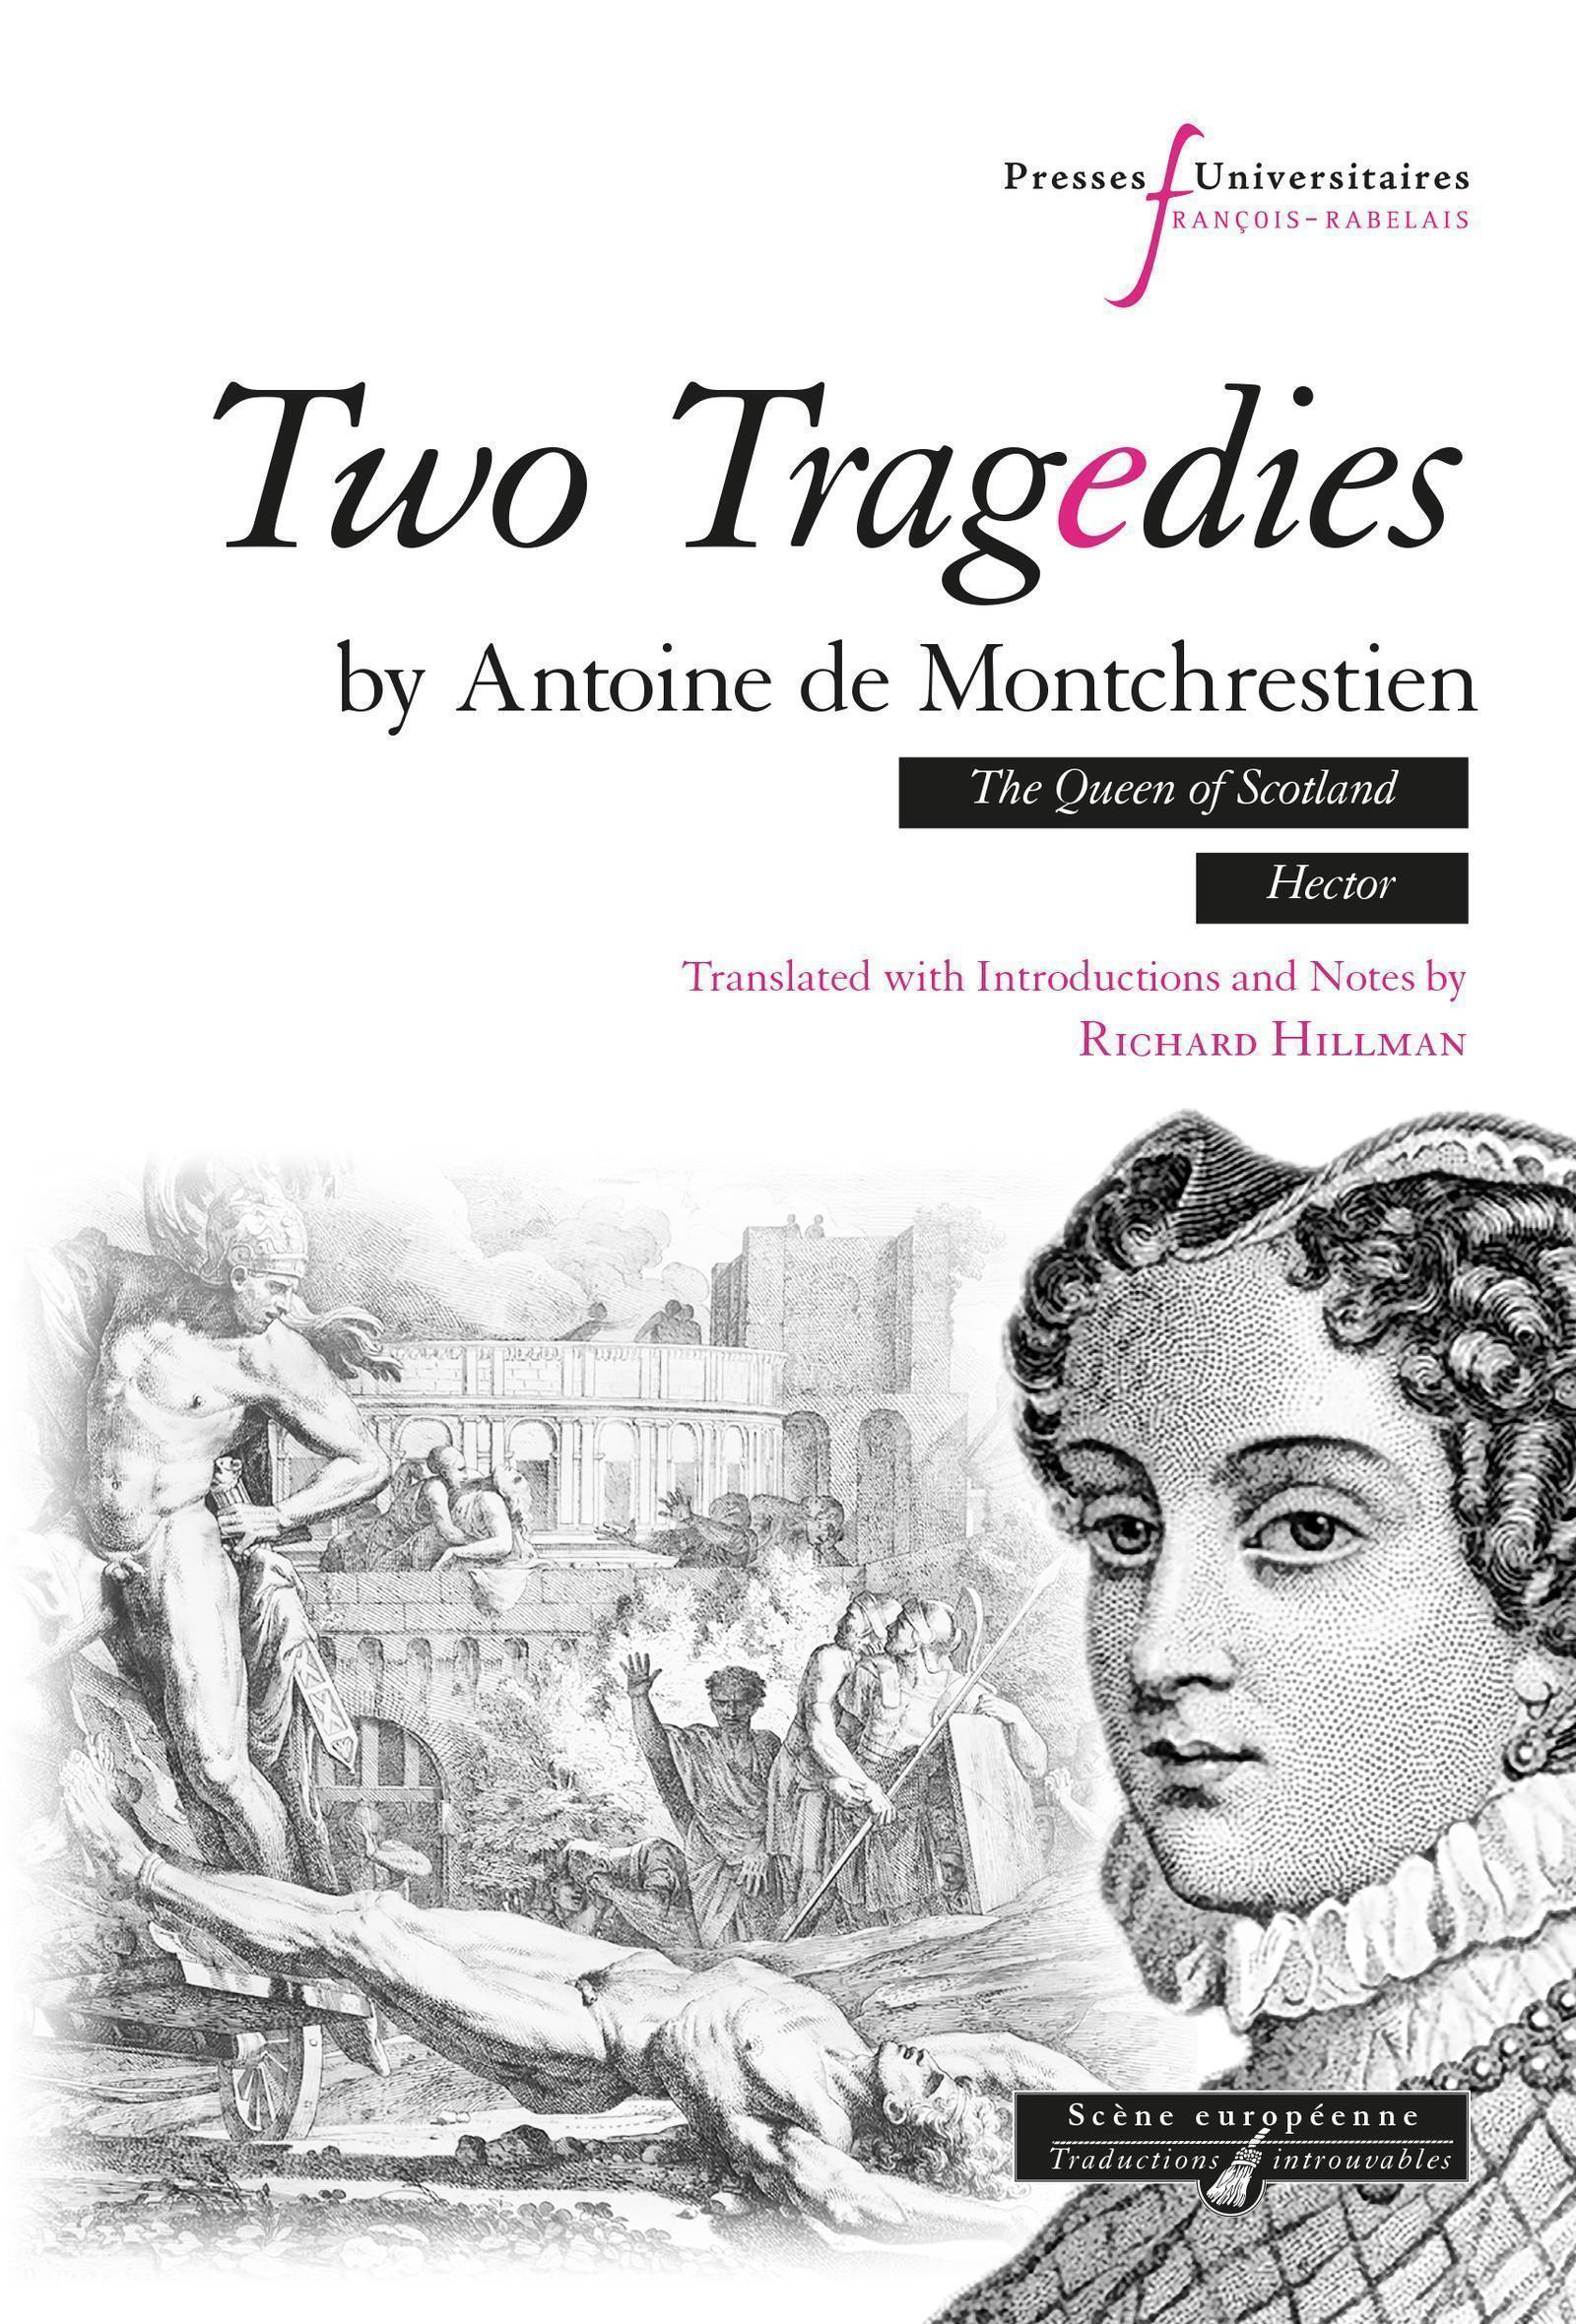 Two tragedies by Antoine de Montchrestien, The Queen of Scotland, Hector (9782869068056-front-cover)